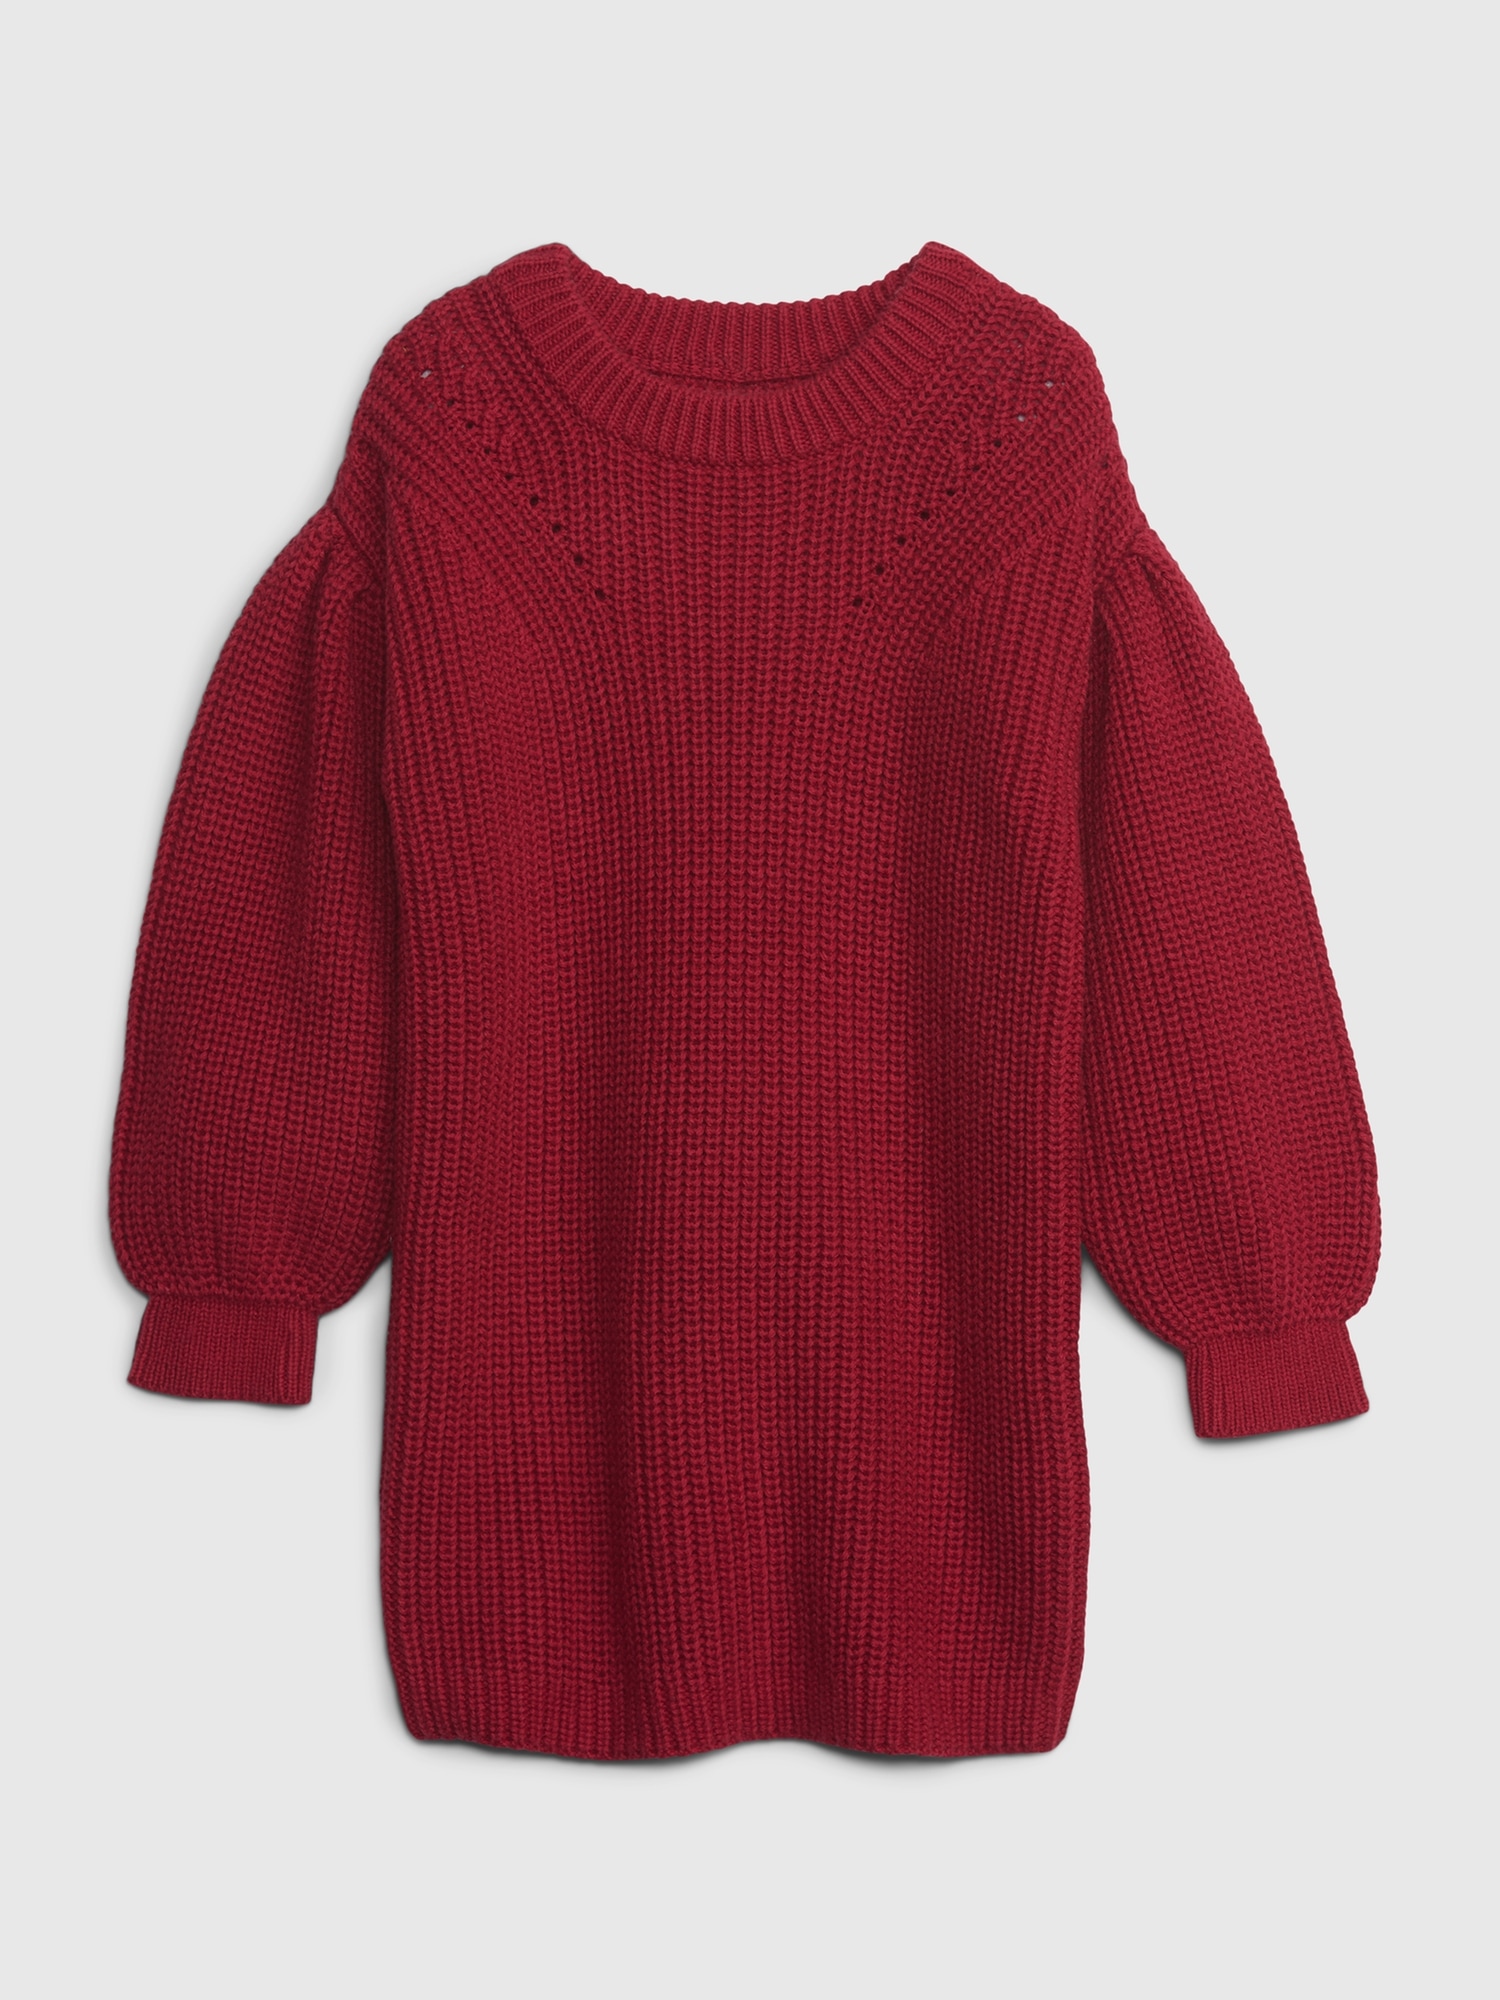 Toddler Puff Sleeve Sweater Dress | Gap